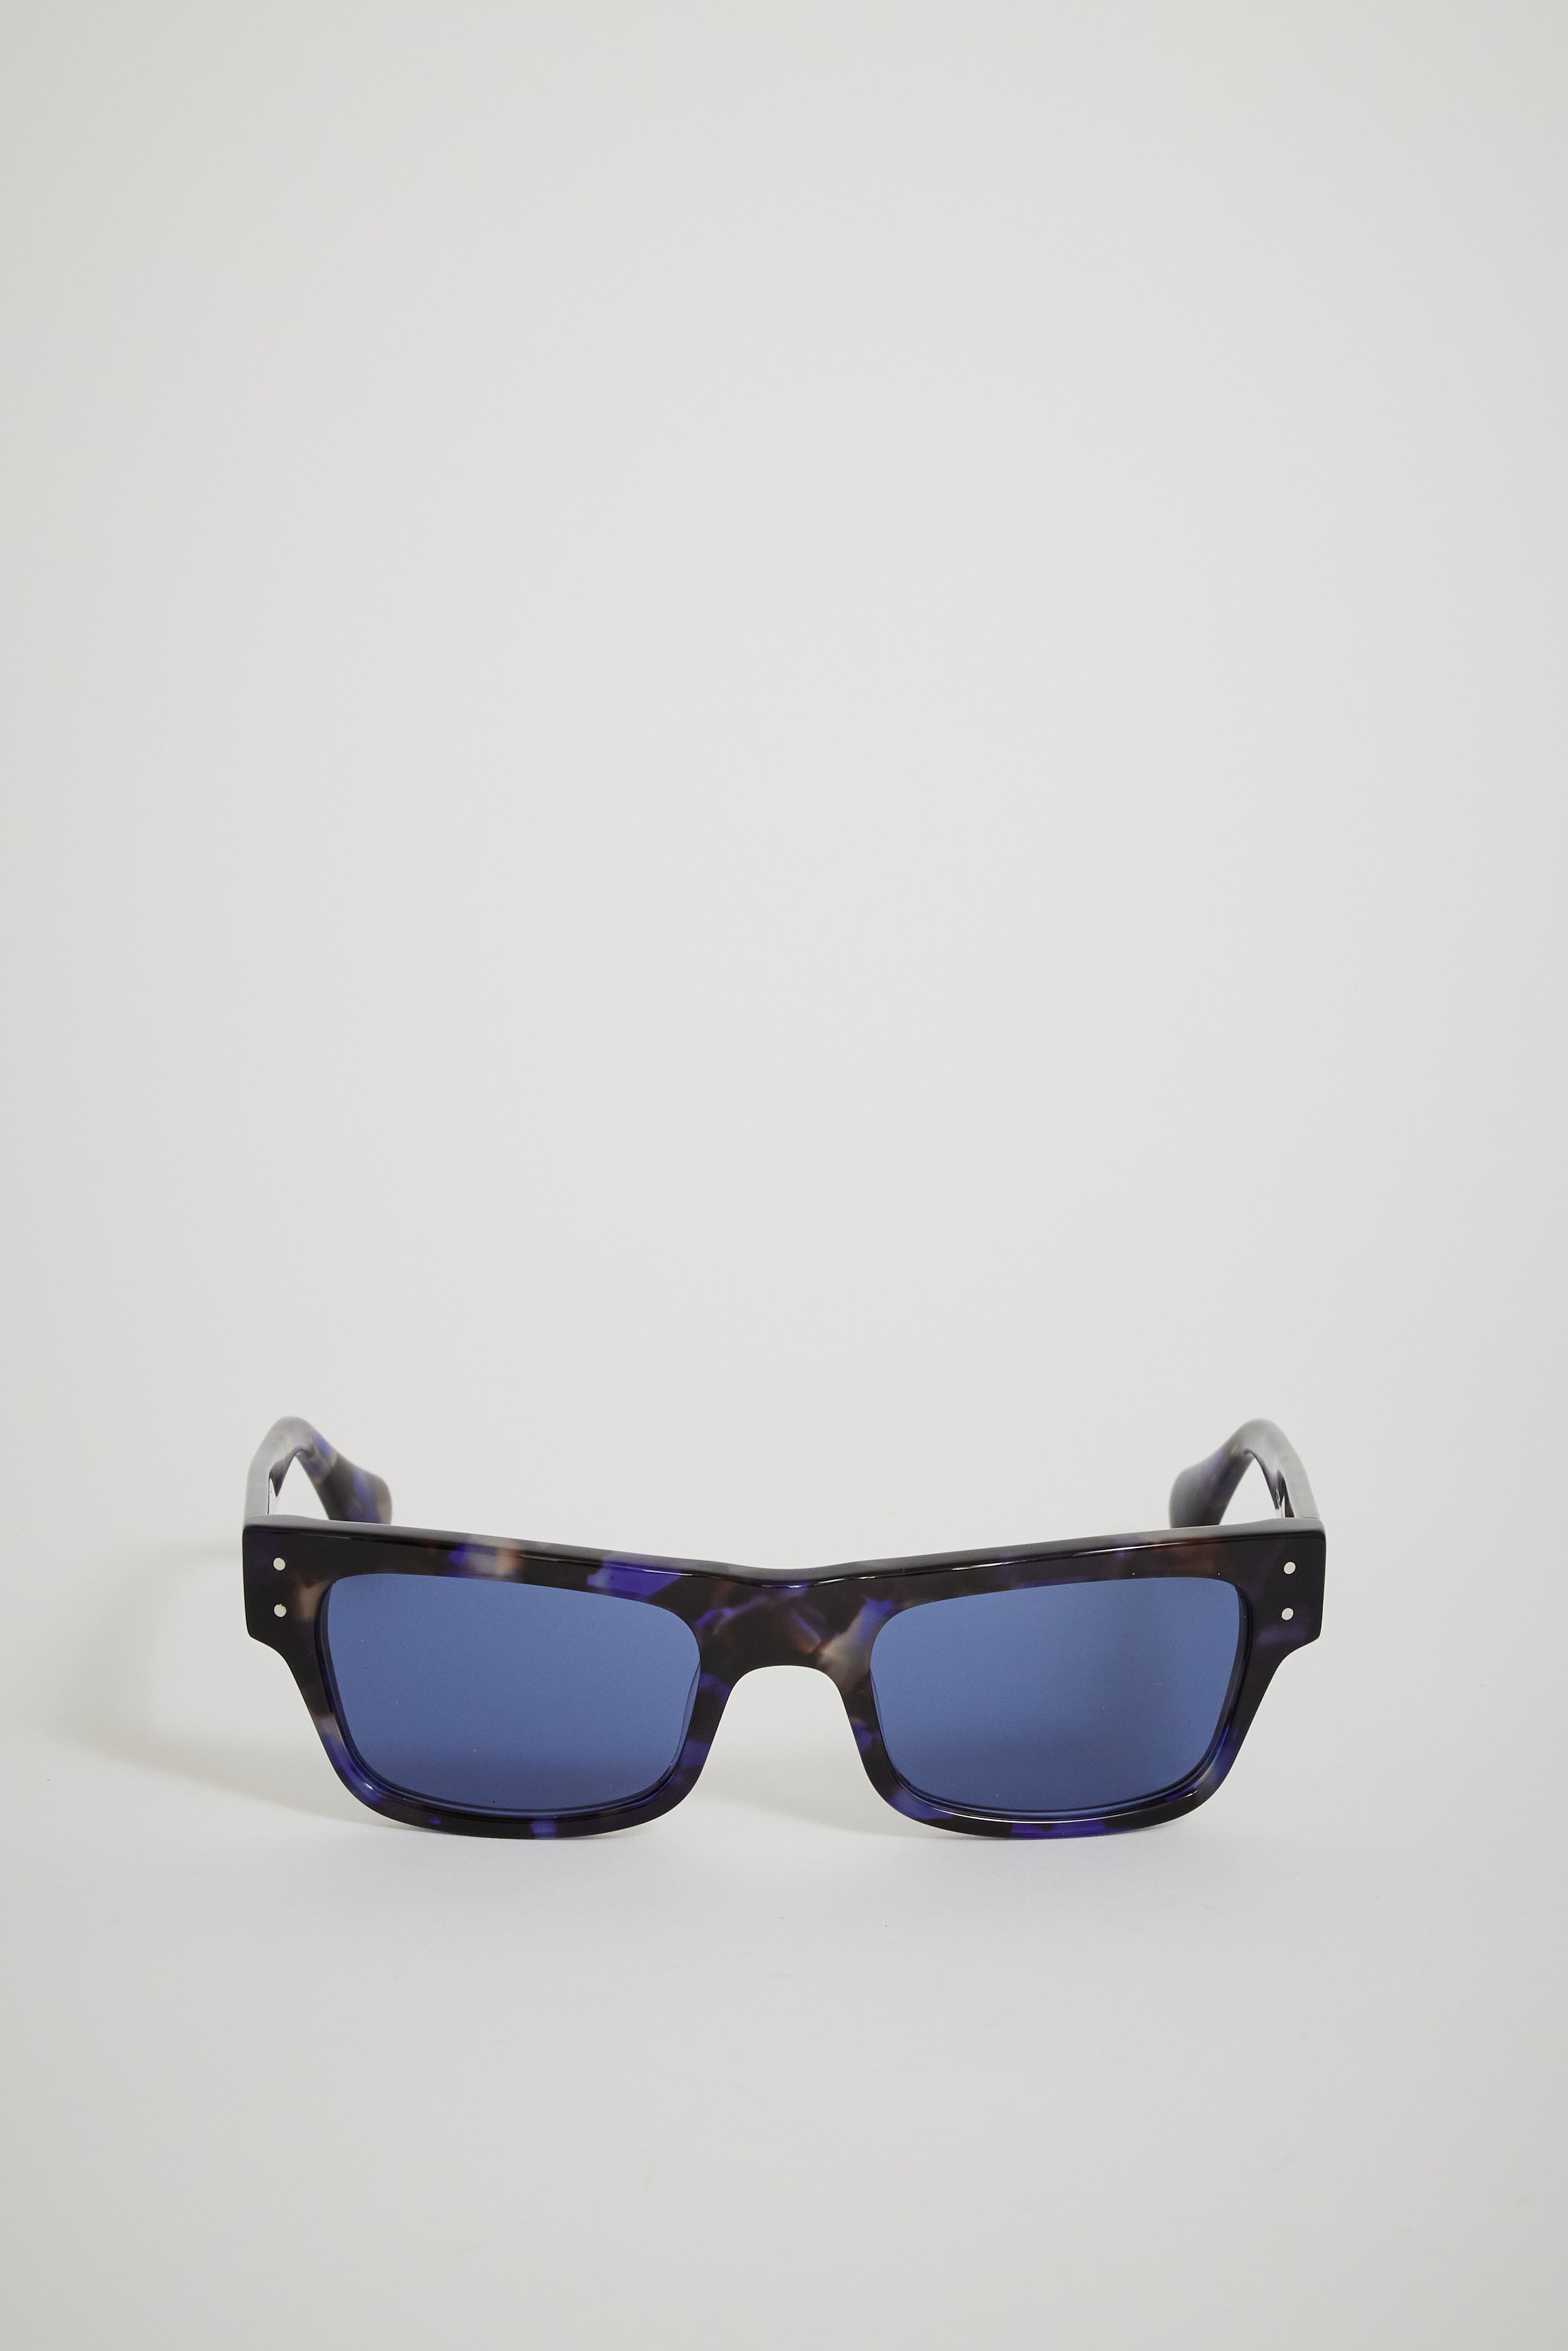 Amazon.com: Oddside Optics Polarized Sunglasses for Men | Sun Glasses with  UV Protection for Driving Fishing Golf Running Work | Men's Sunglasses |  Frost Frame/Dark Blue Lens : Sports & Outdoors